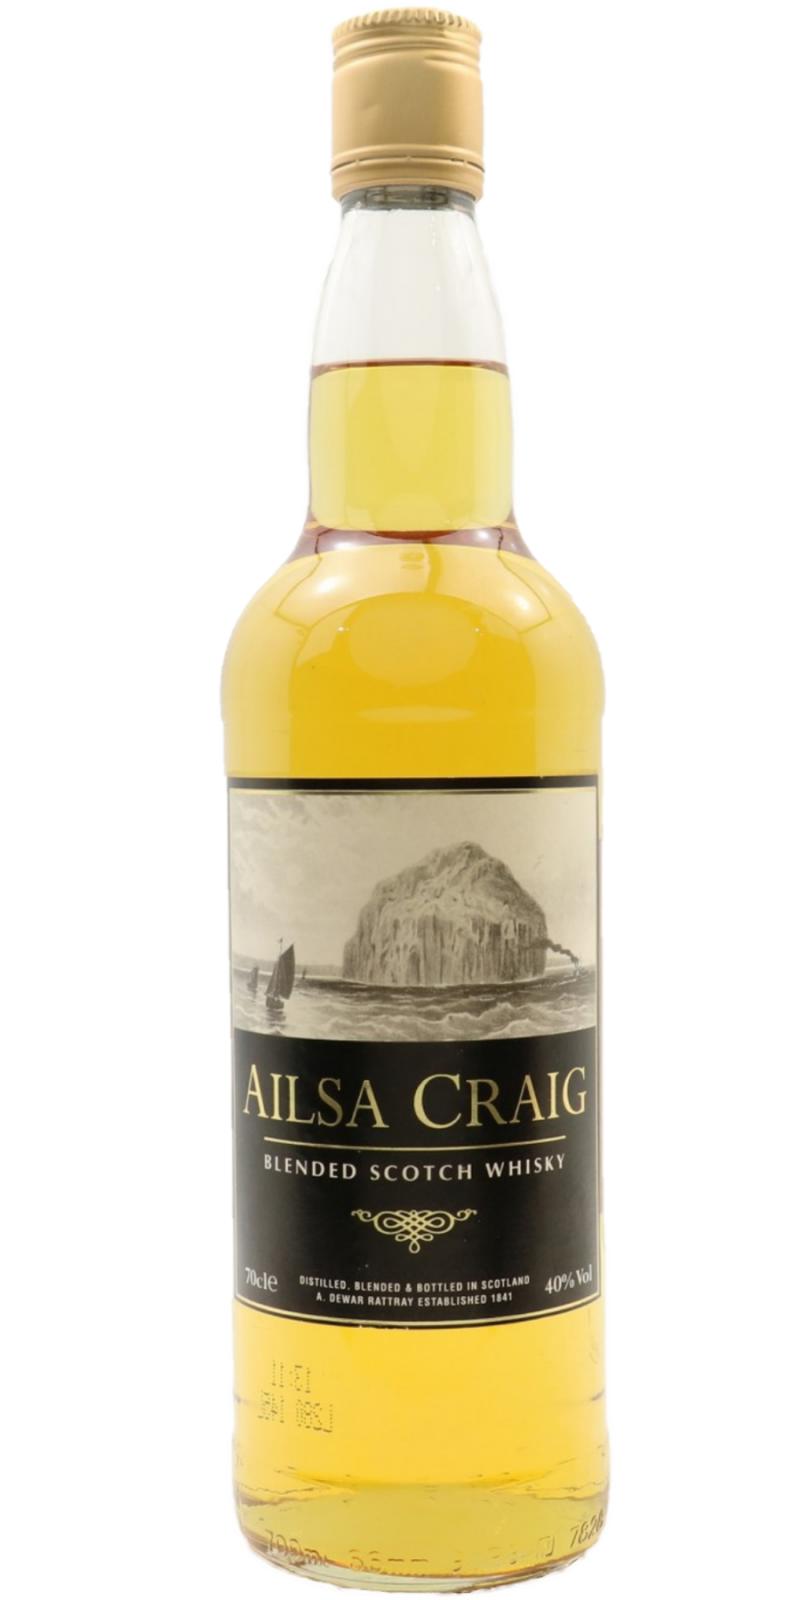 Ailsa Craig Blended Scotch Whisky